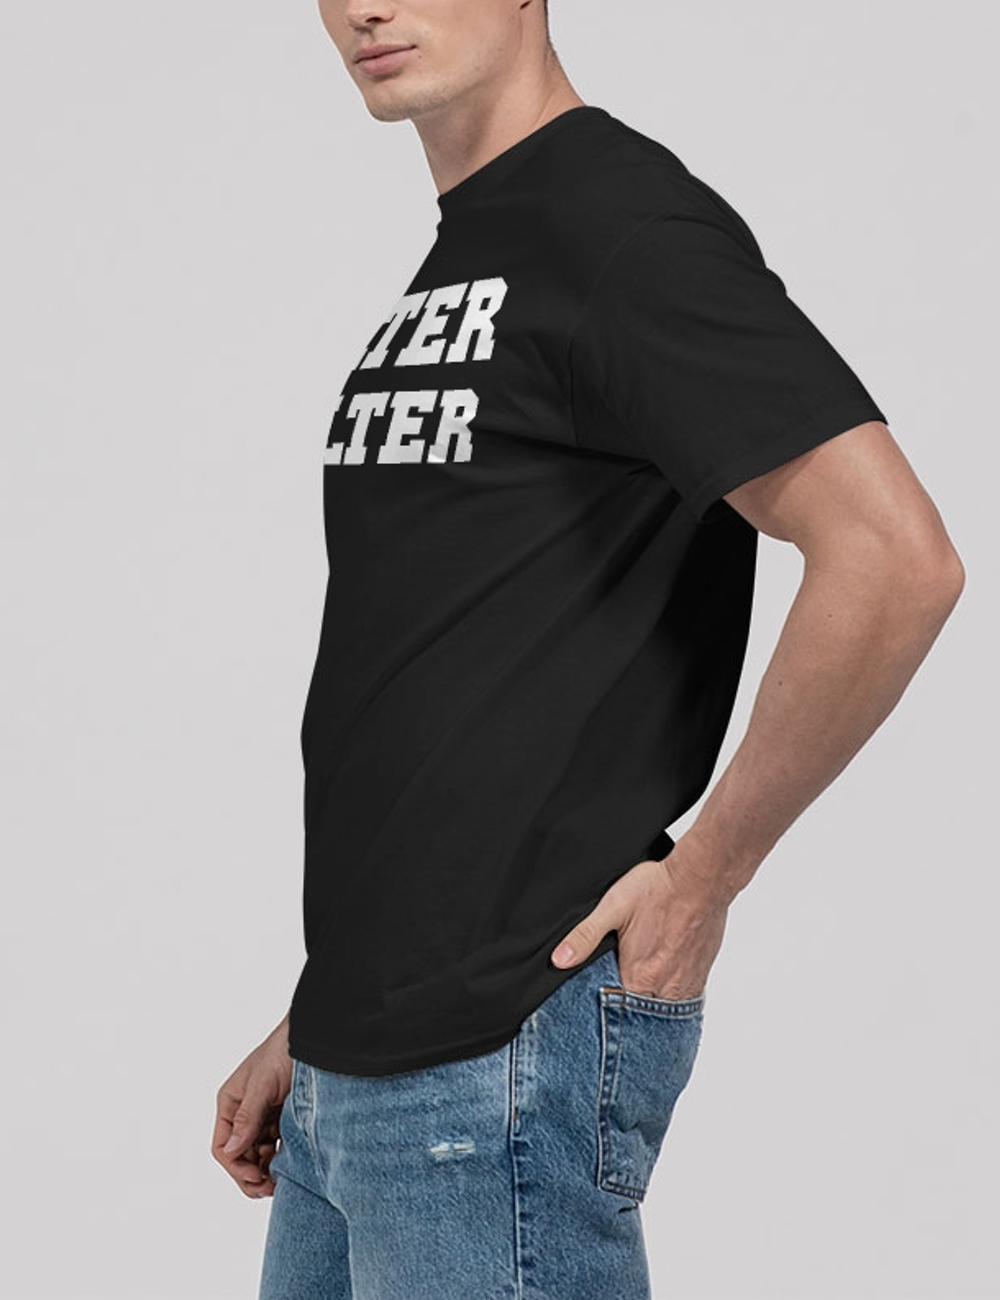 Helter Skelter Men's Classic T-Shirt OniTakai